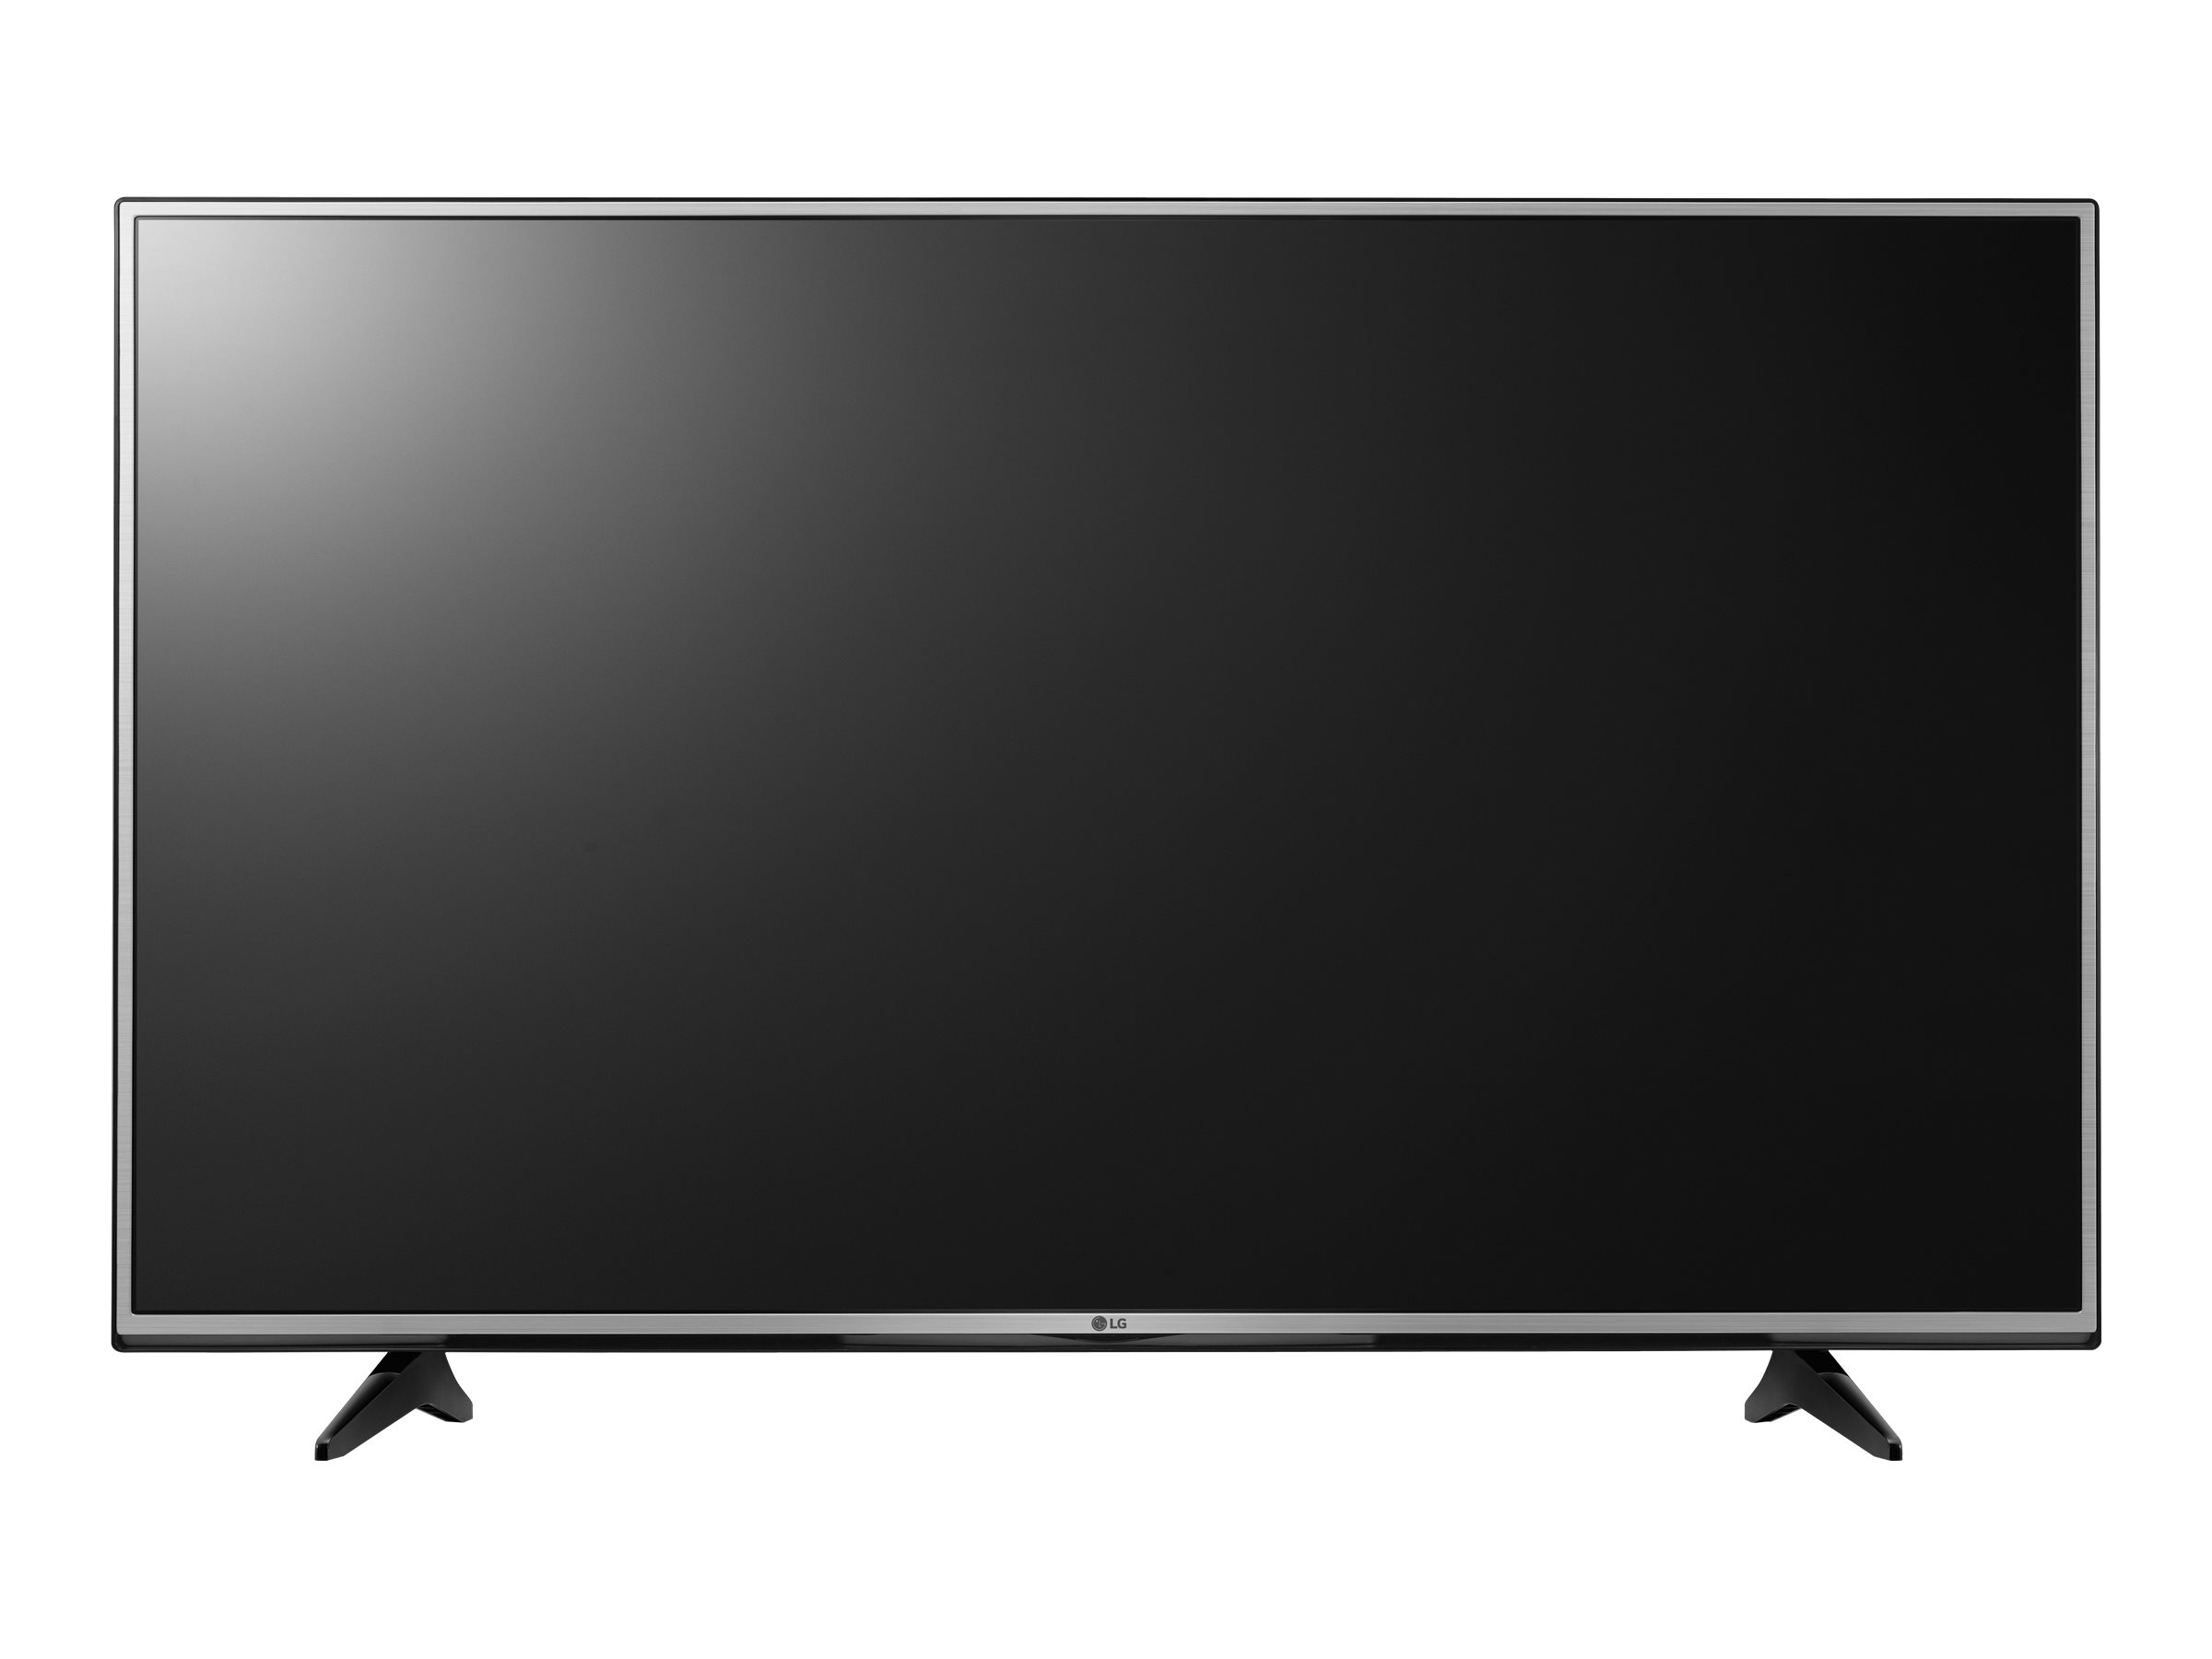 LG 55UH6030 - 55" Diagonal Class (54.6" viewable) LED-backlit LCD TV - Smart TV - webOS - 4K UHD (2160p) 3840 x 2160 - HDR - image 1 of 13